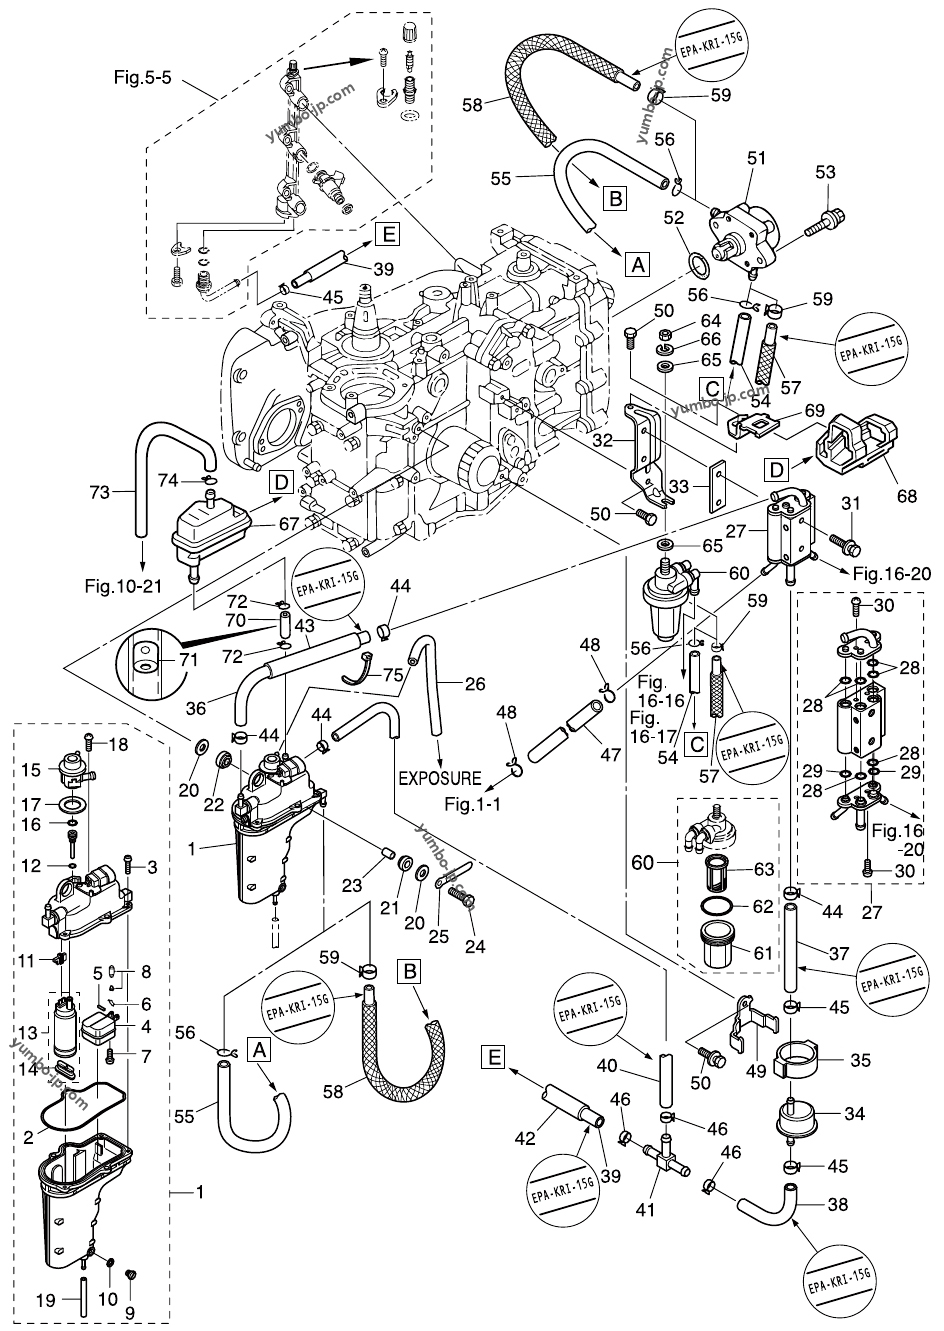 Tohatsu Outboard Motor Wiring Diagram - Wiring Diagram